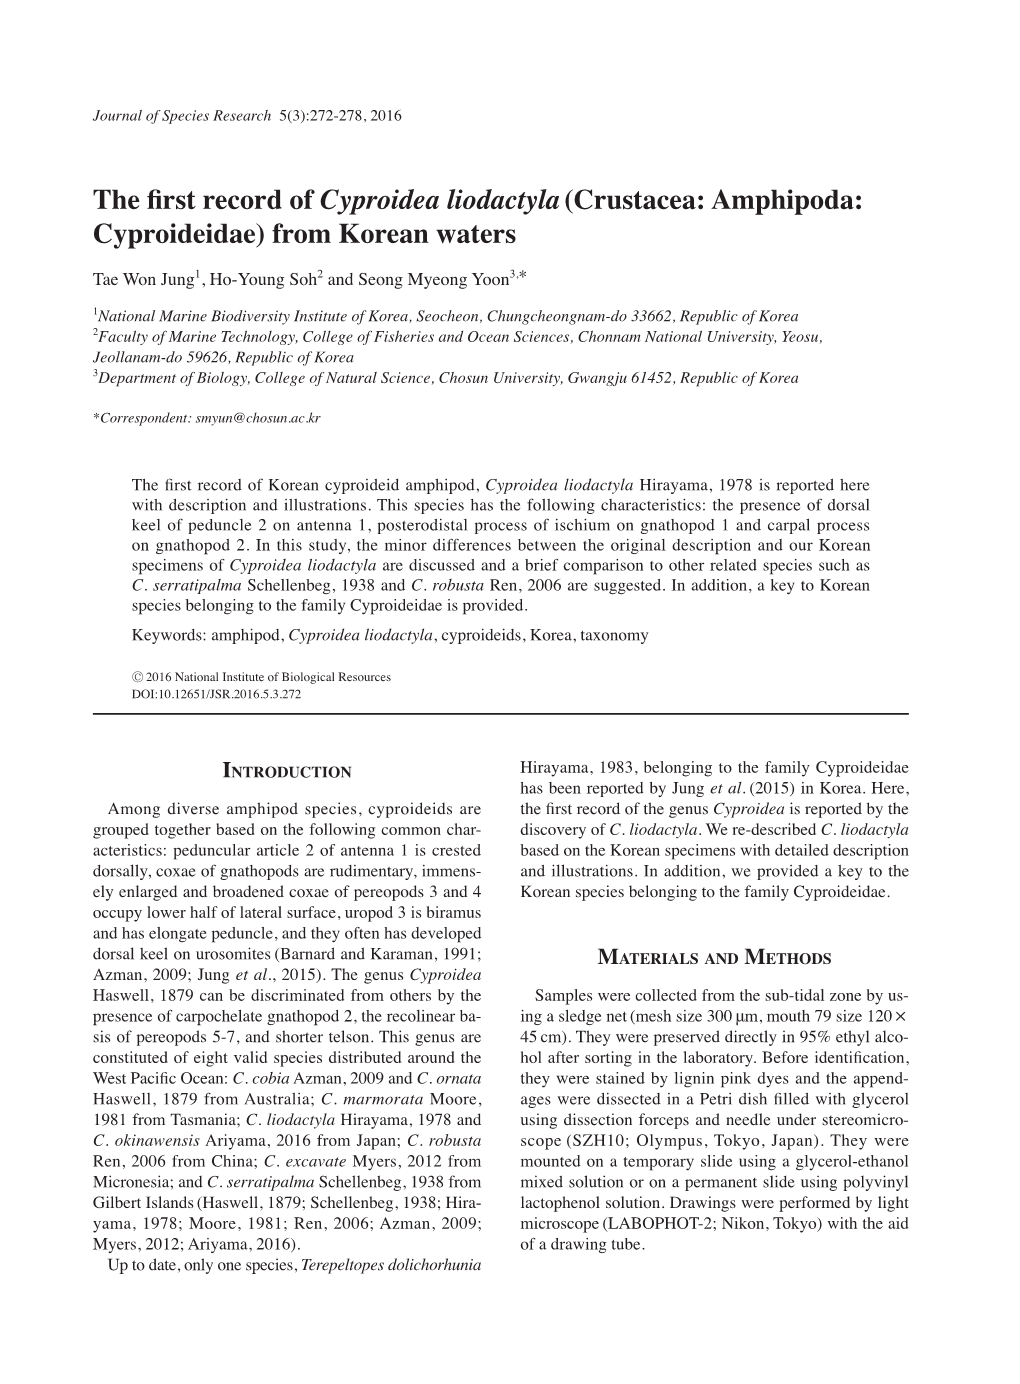 (Crustacea: Amphipoda: Cyproideidae) from Korean Waters